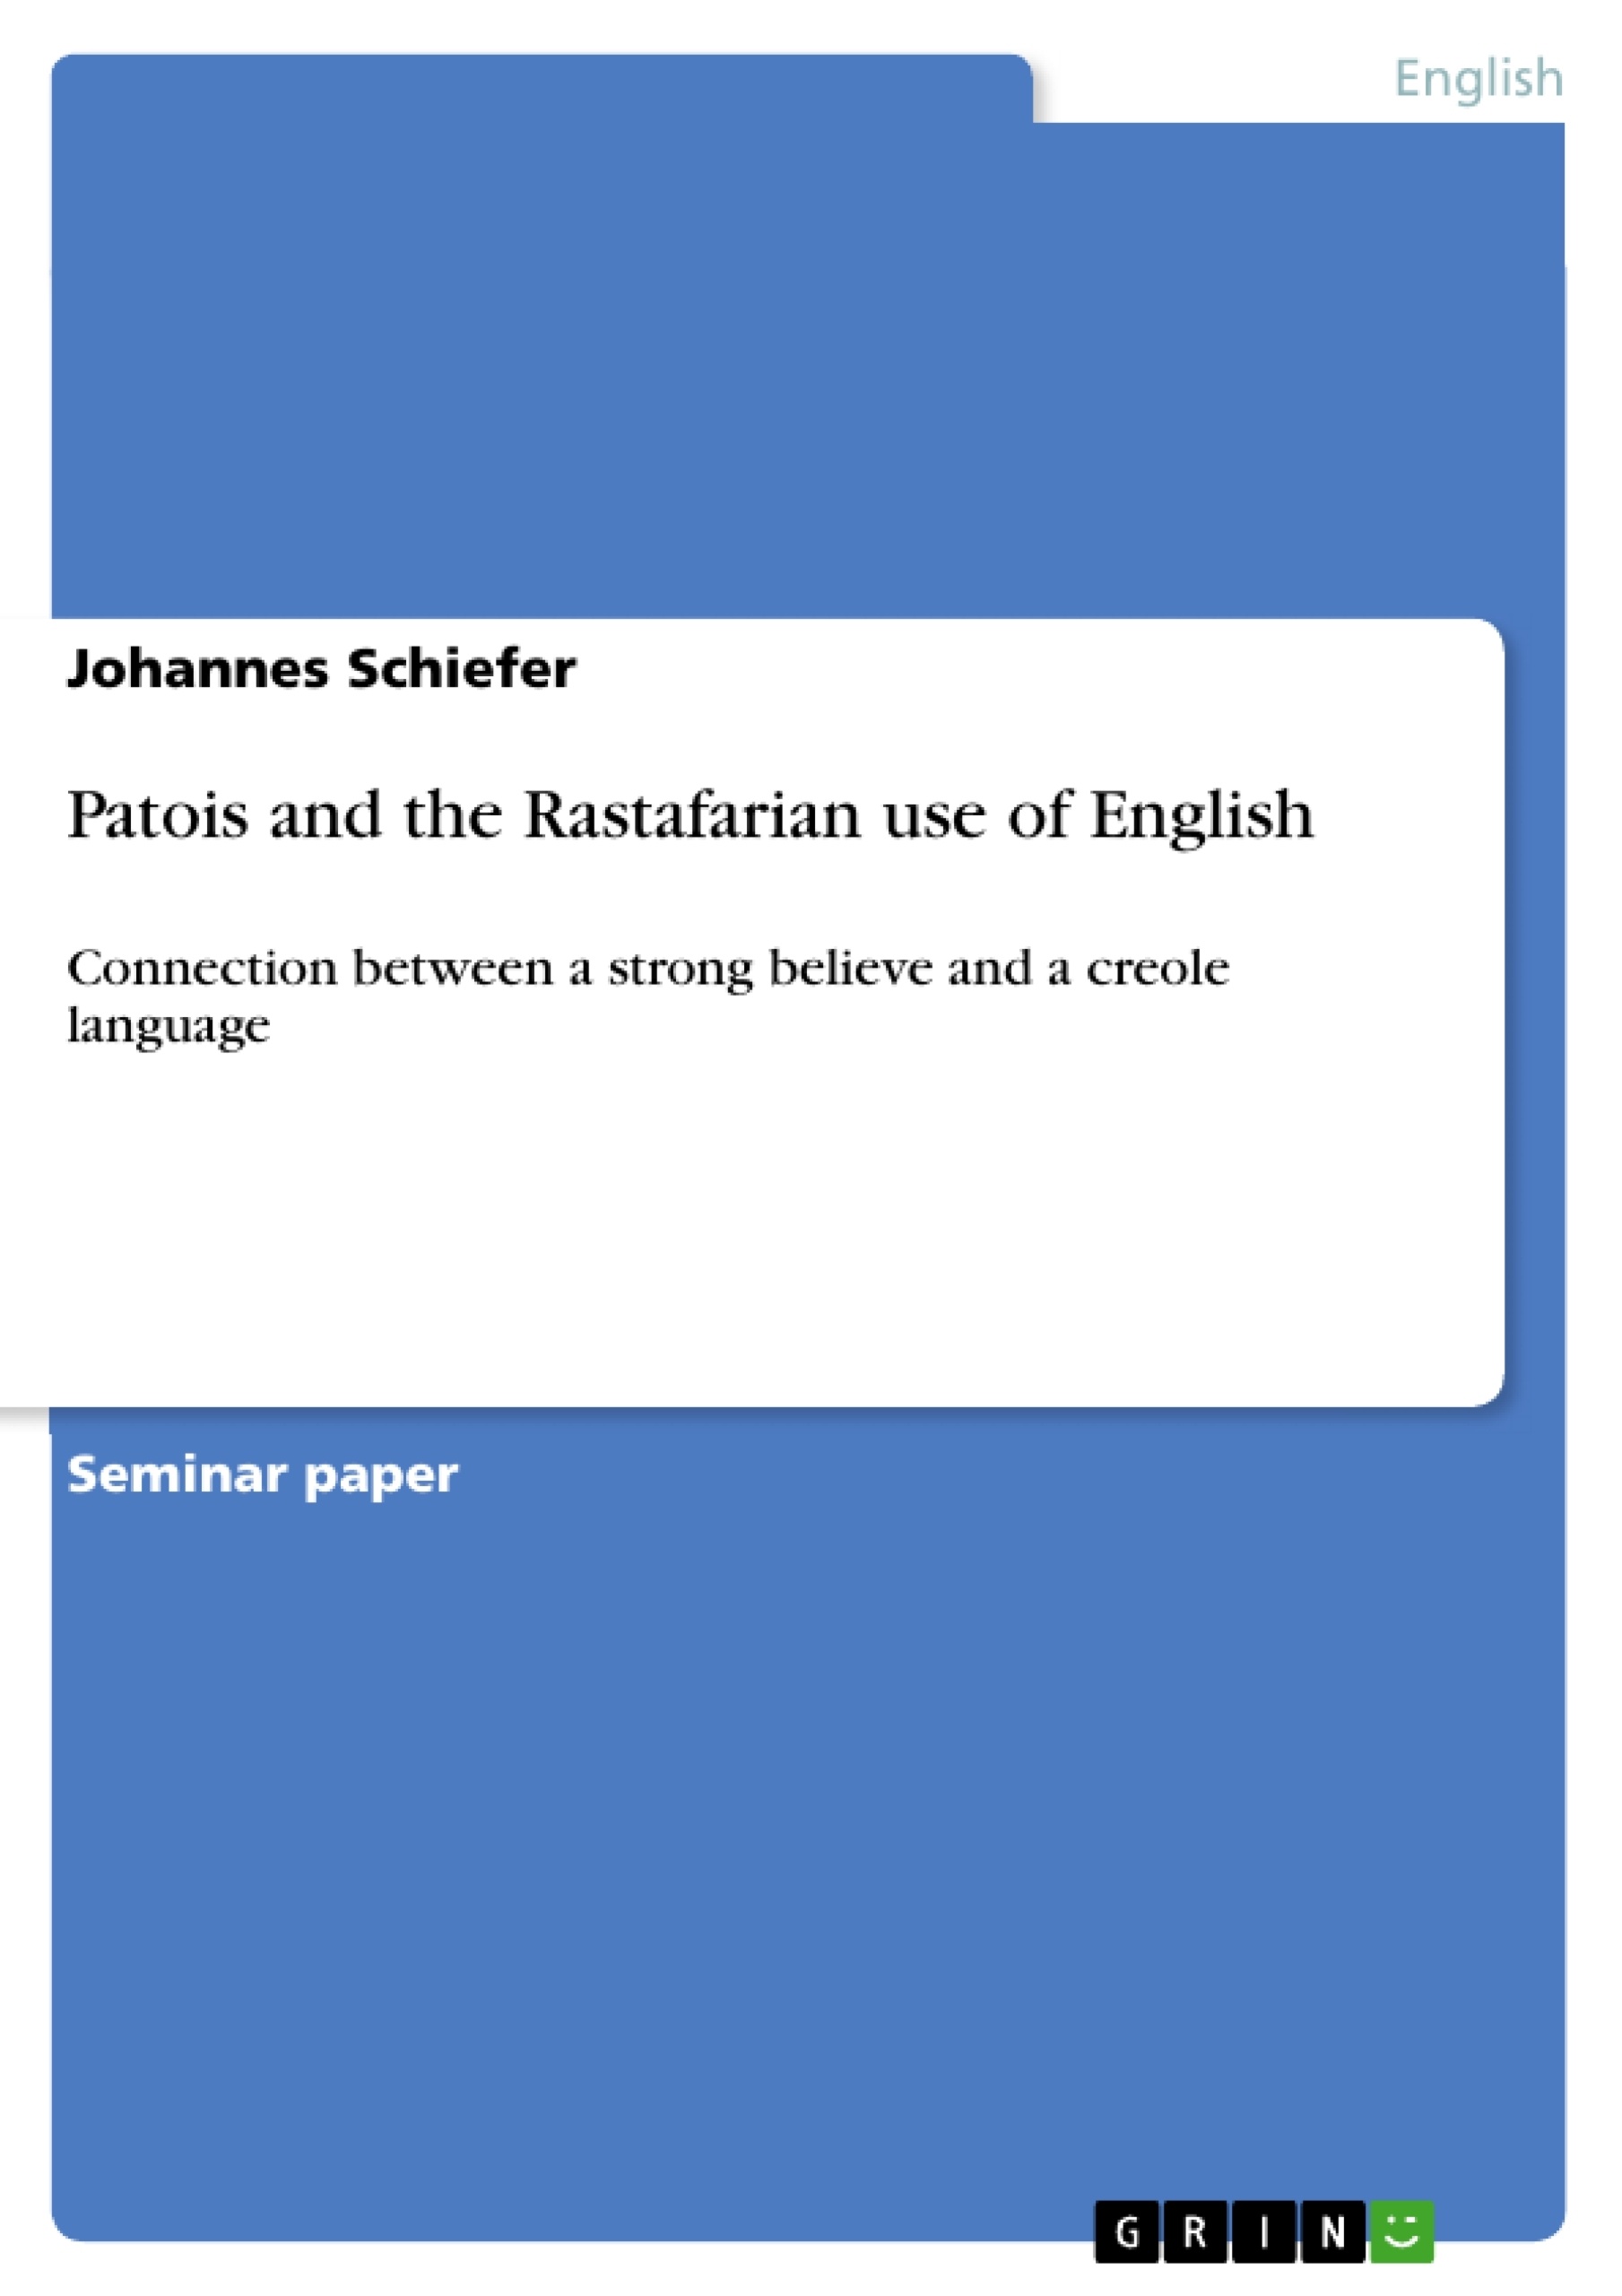 Title: Patois and the Rastafarian use of English 